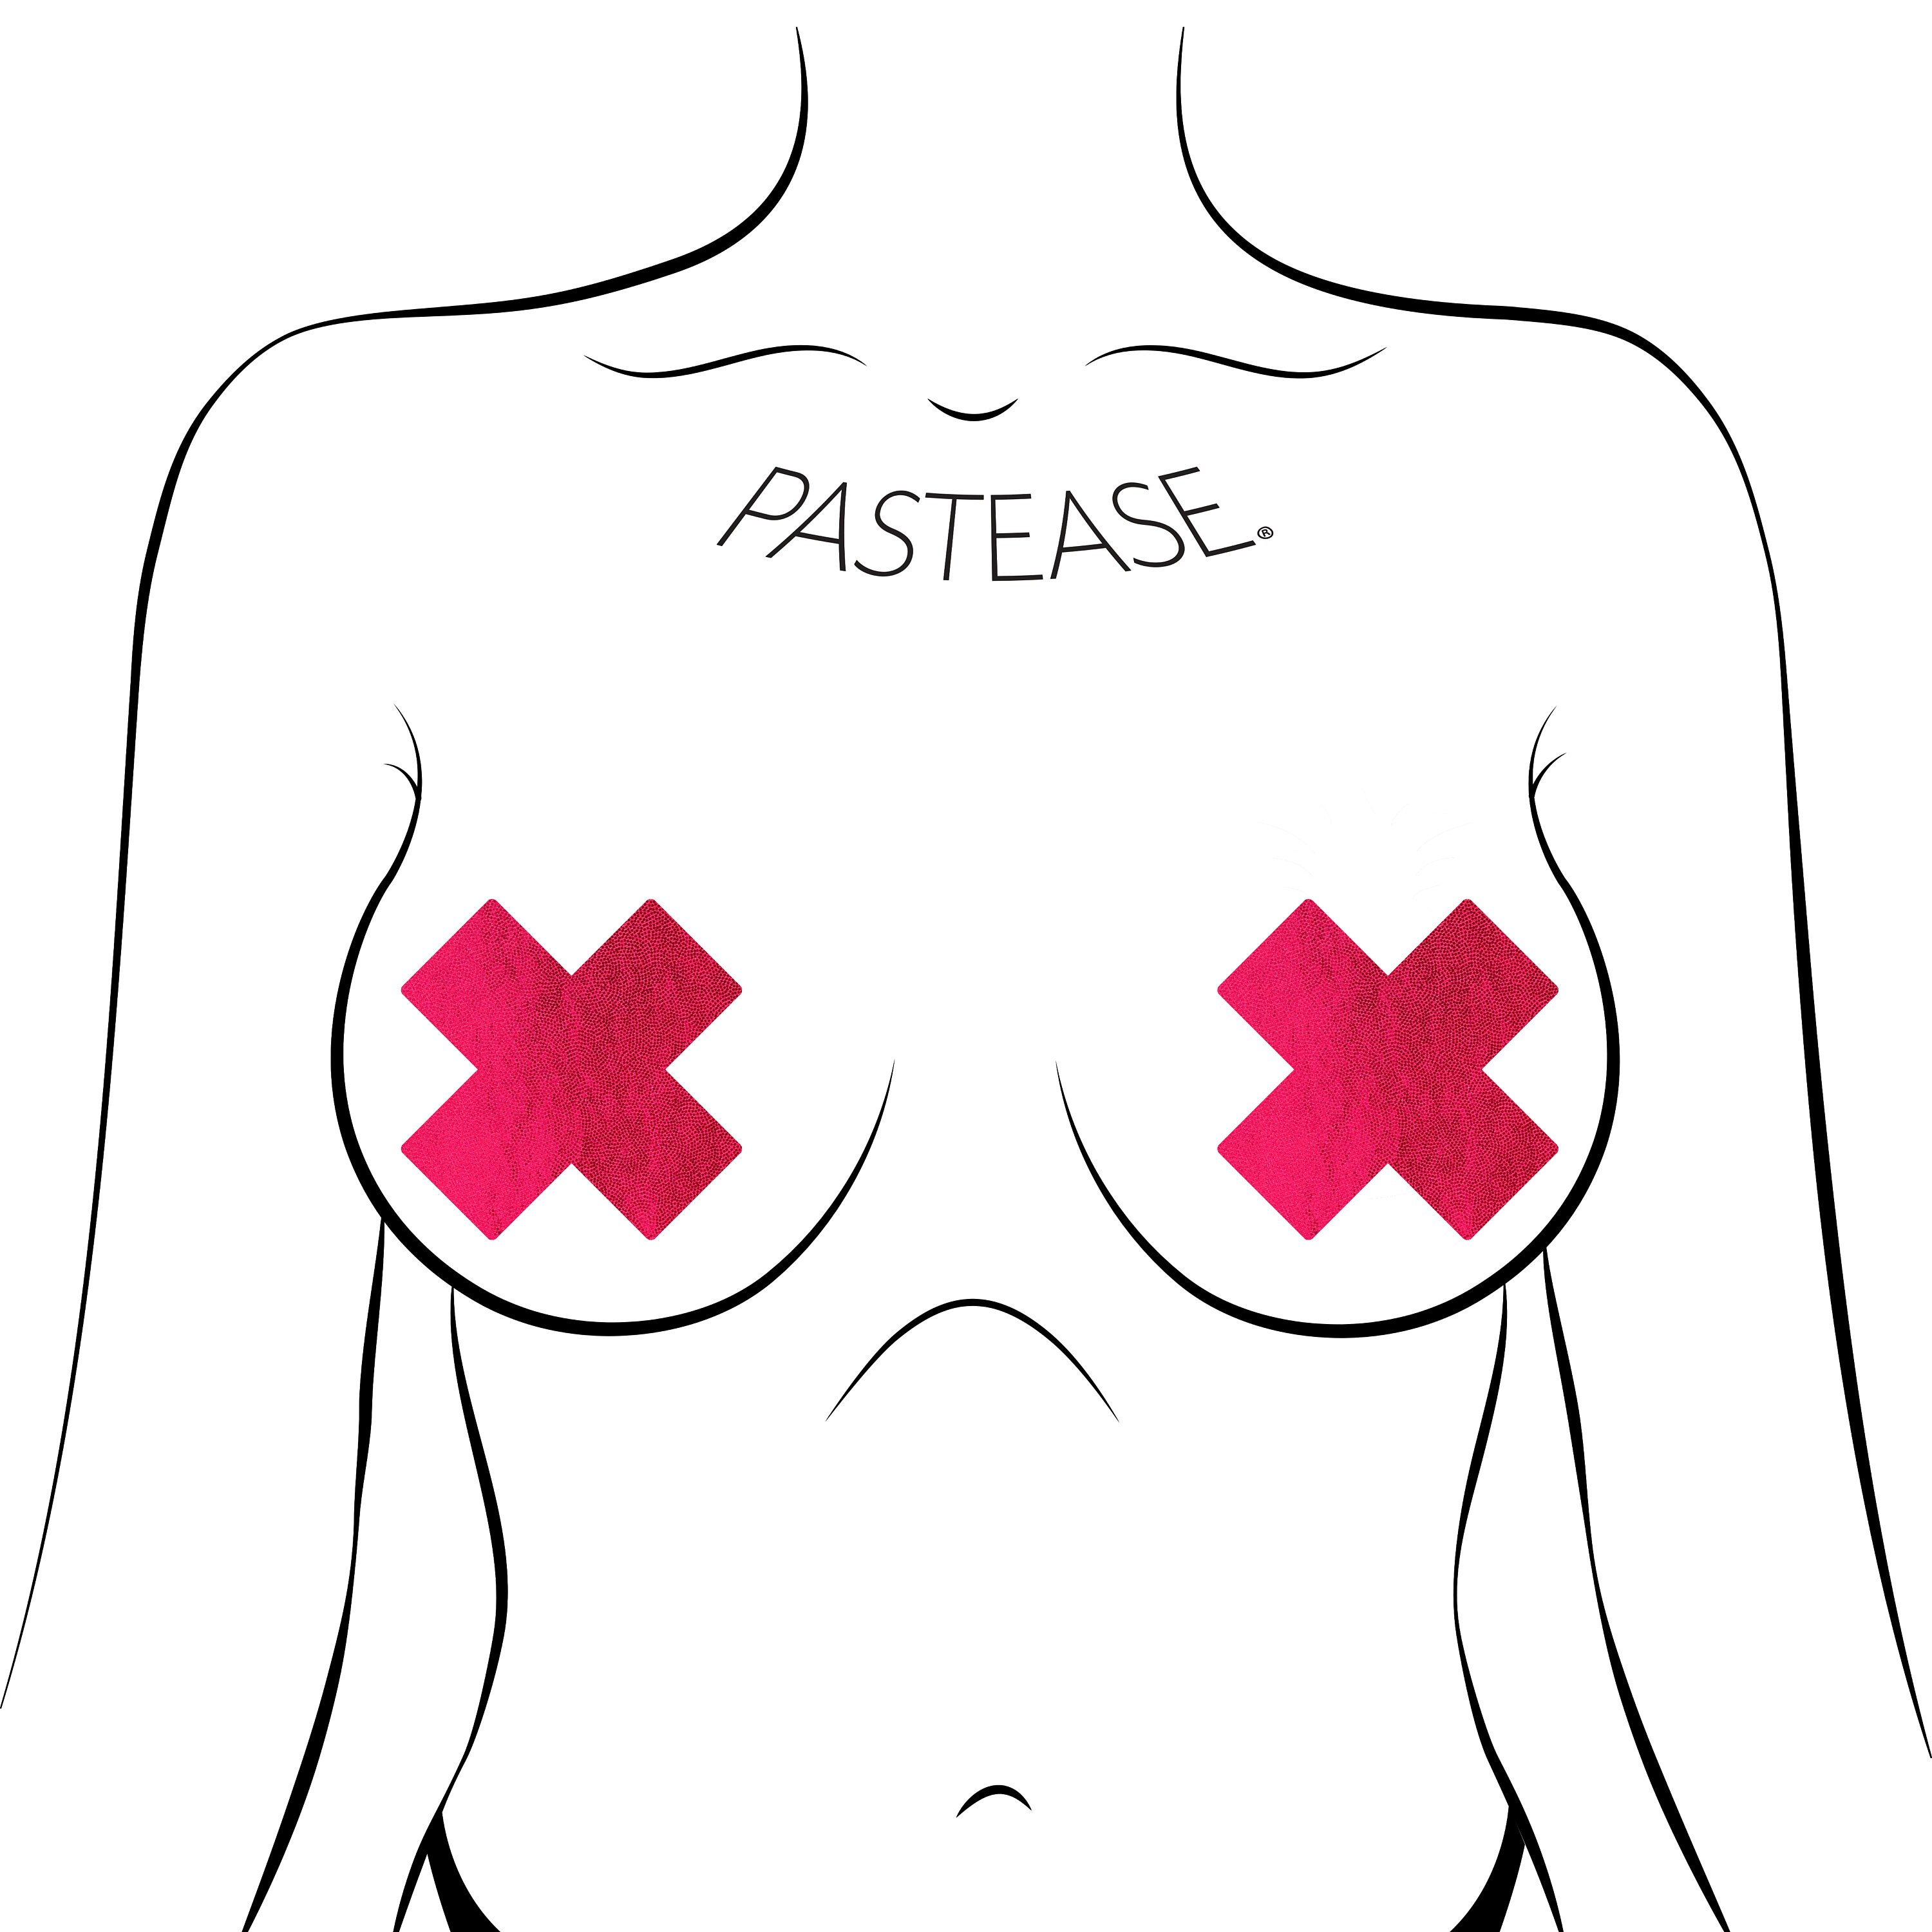 Pasties Plus X: Liquid Red Cross Nipple Pasties by Pastease® O/s